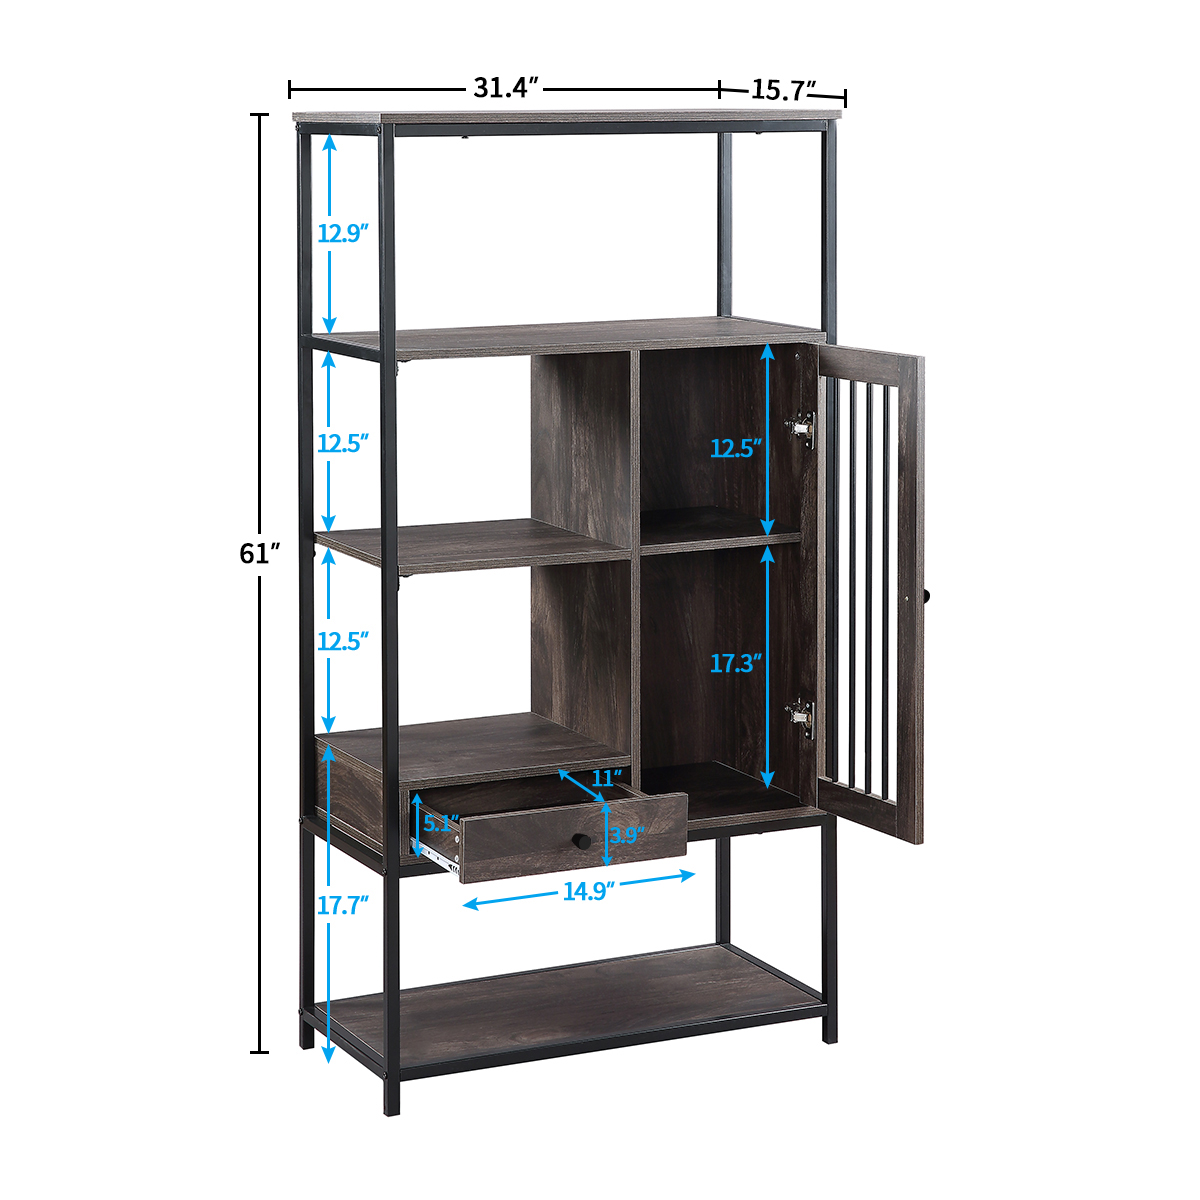 5 Tier Display Shelf with Doors and Drawers - PP295217DAA